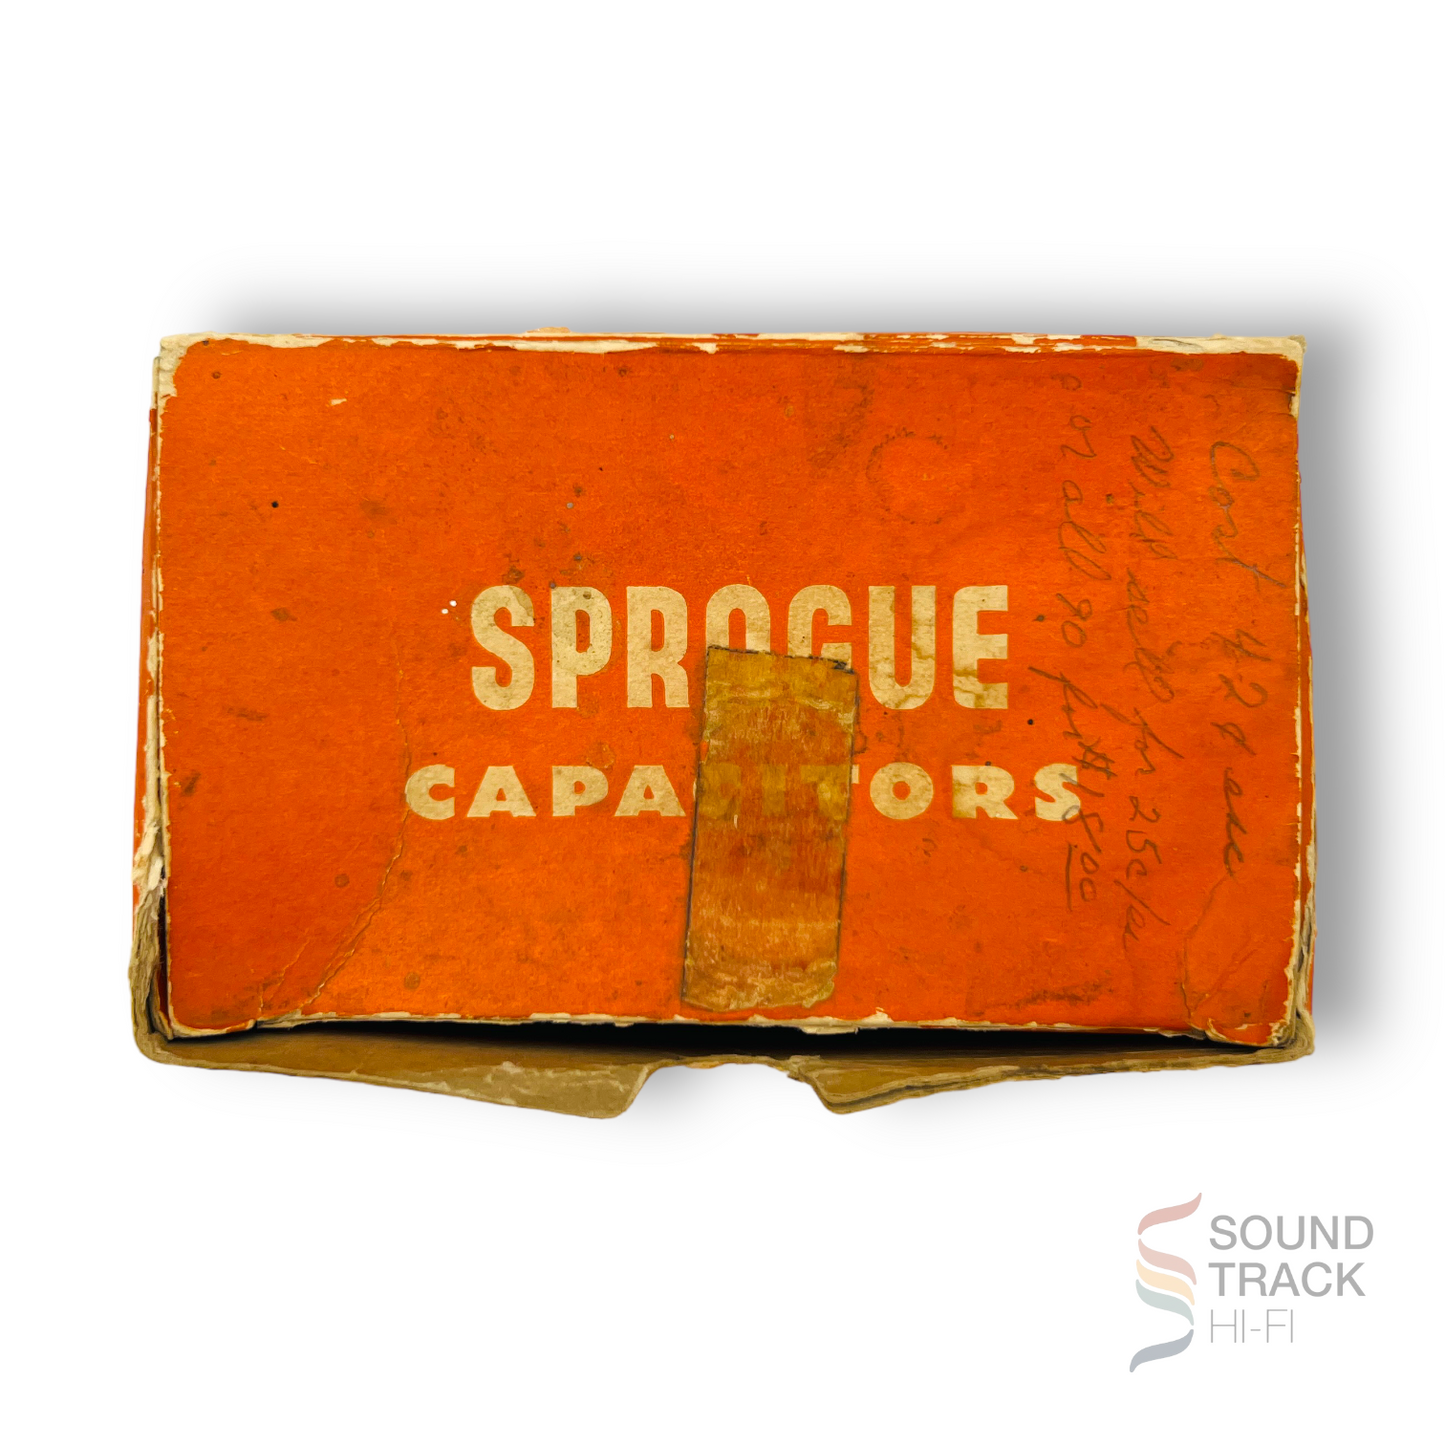 Sprague 0.15 uf 200 VDC Black Beauty Capacitors Case of 25